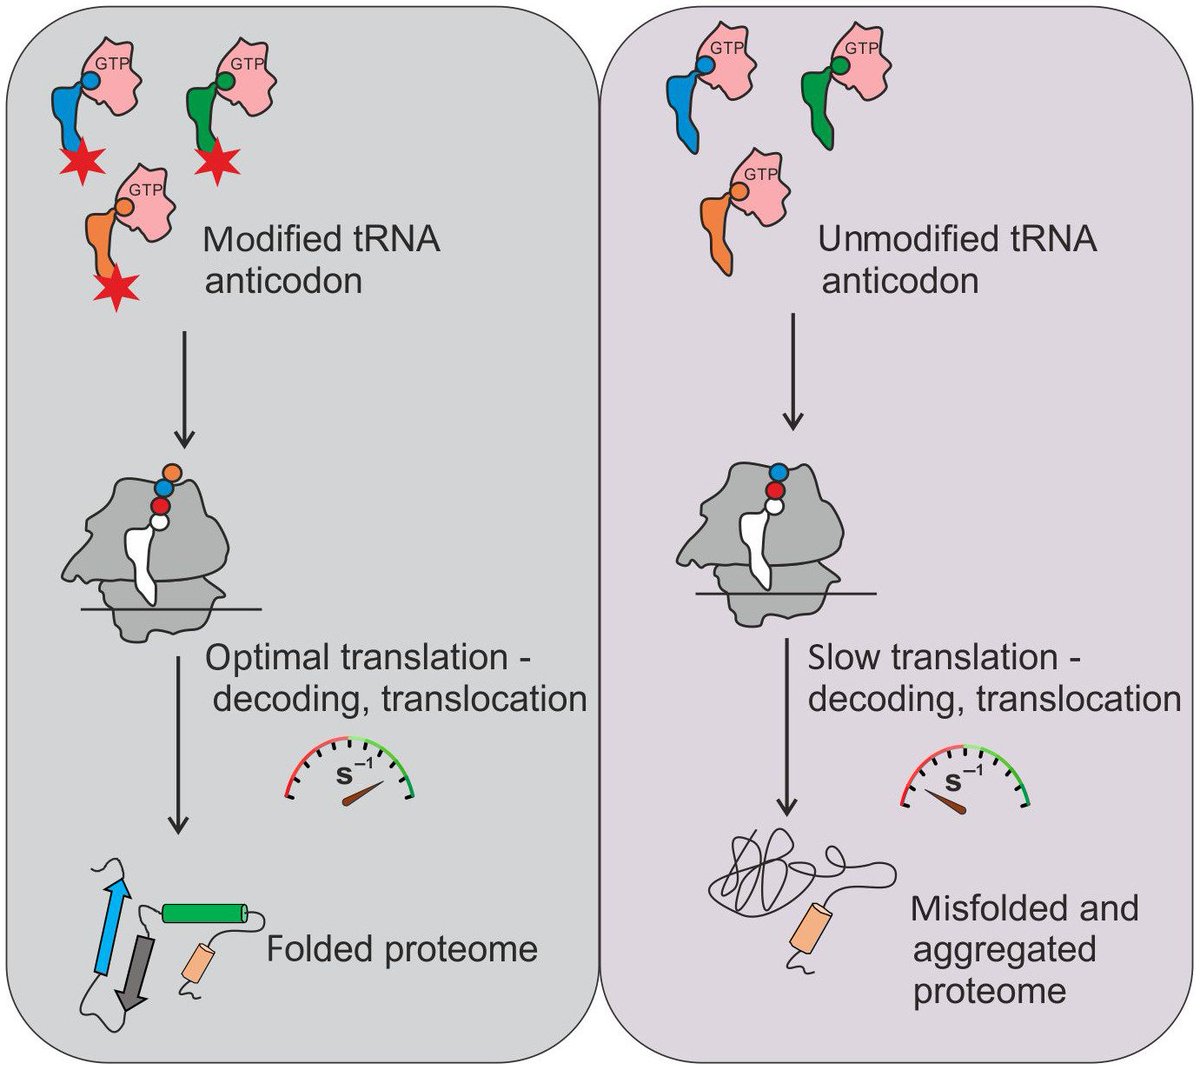 #Review: The #epitranscriptome in #translationregulation →febs.onlinelibrary.wiley.com/doi/10.1002/18… #proteinsynthesis #RNAmodifications #mRNAtranslation #proteinhomeostasis #RNA